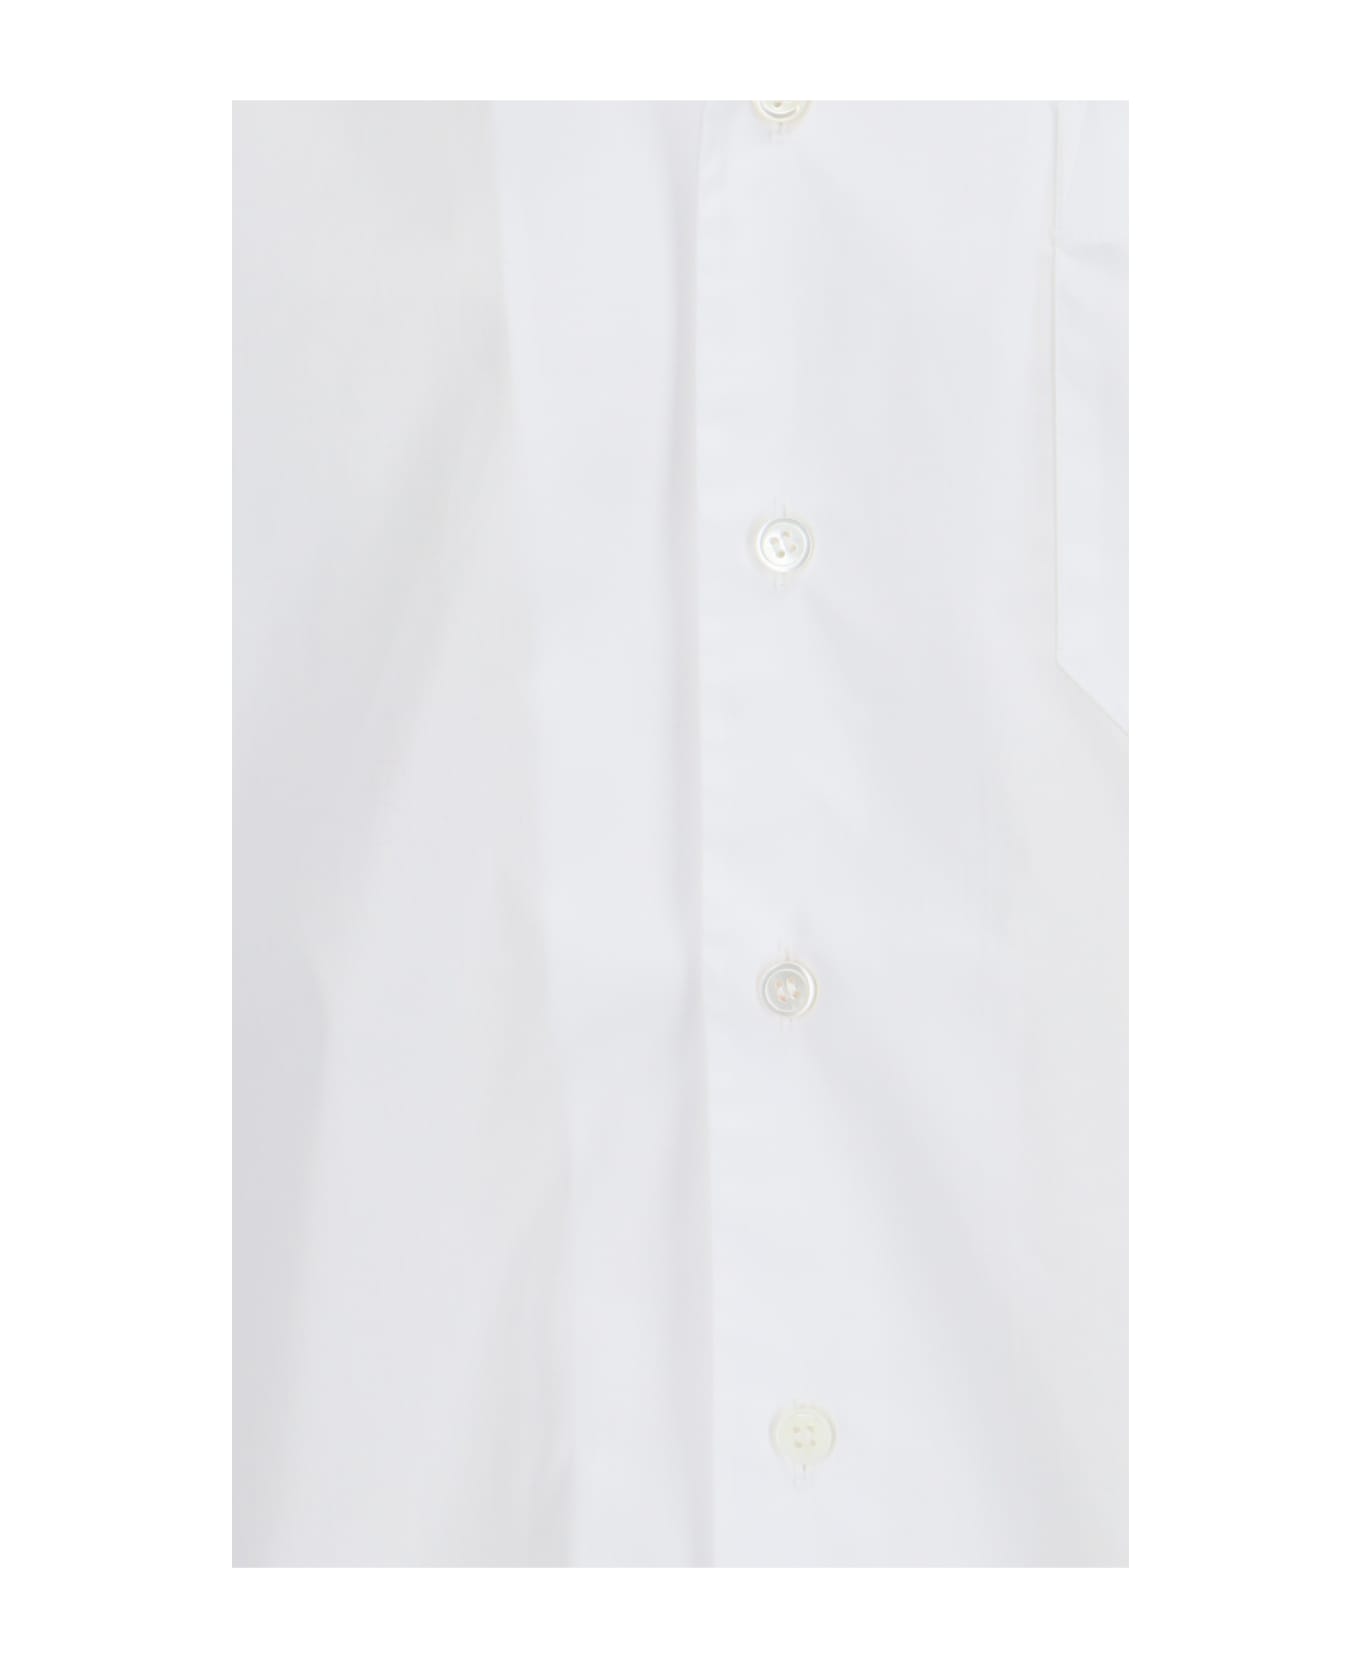 Marni Logo Bowling Shirt - White シャツ